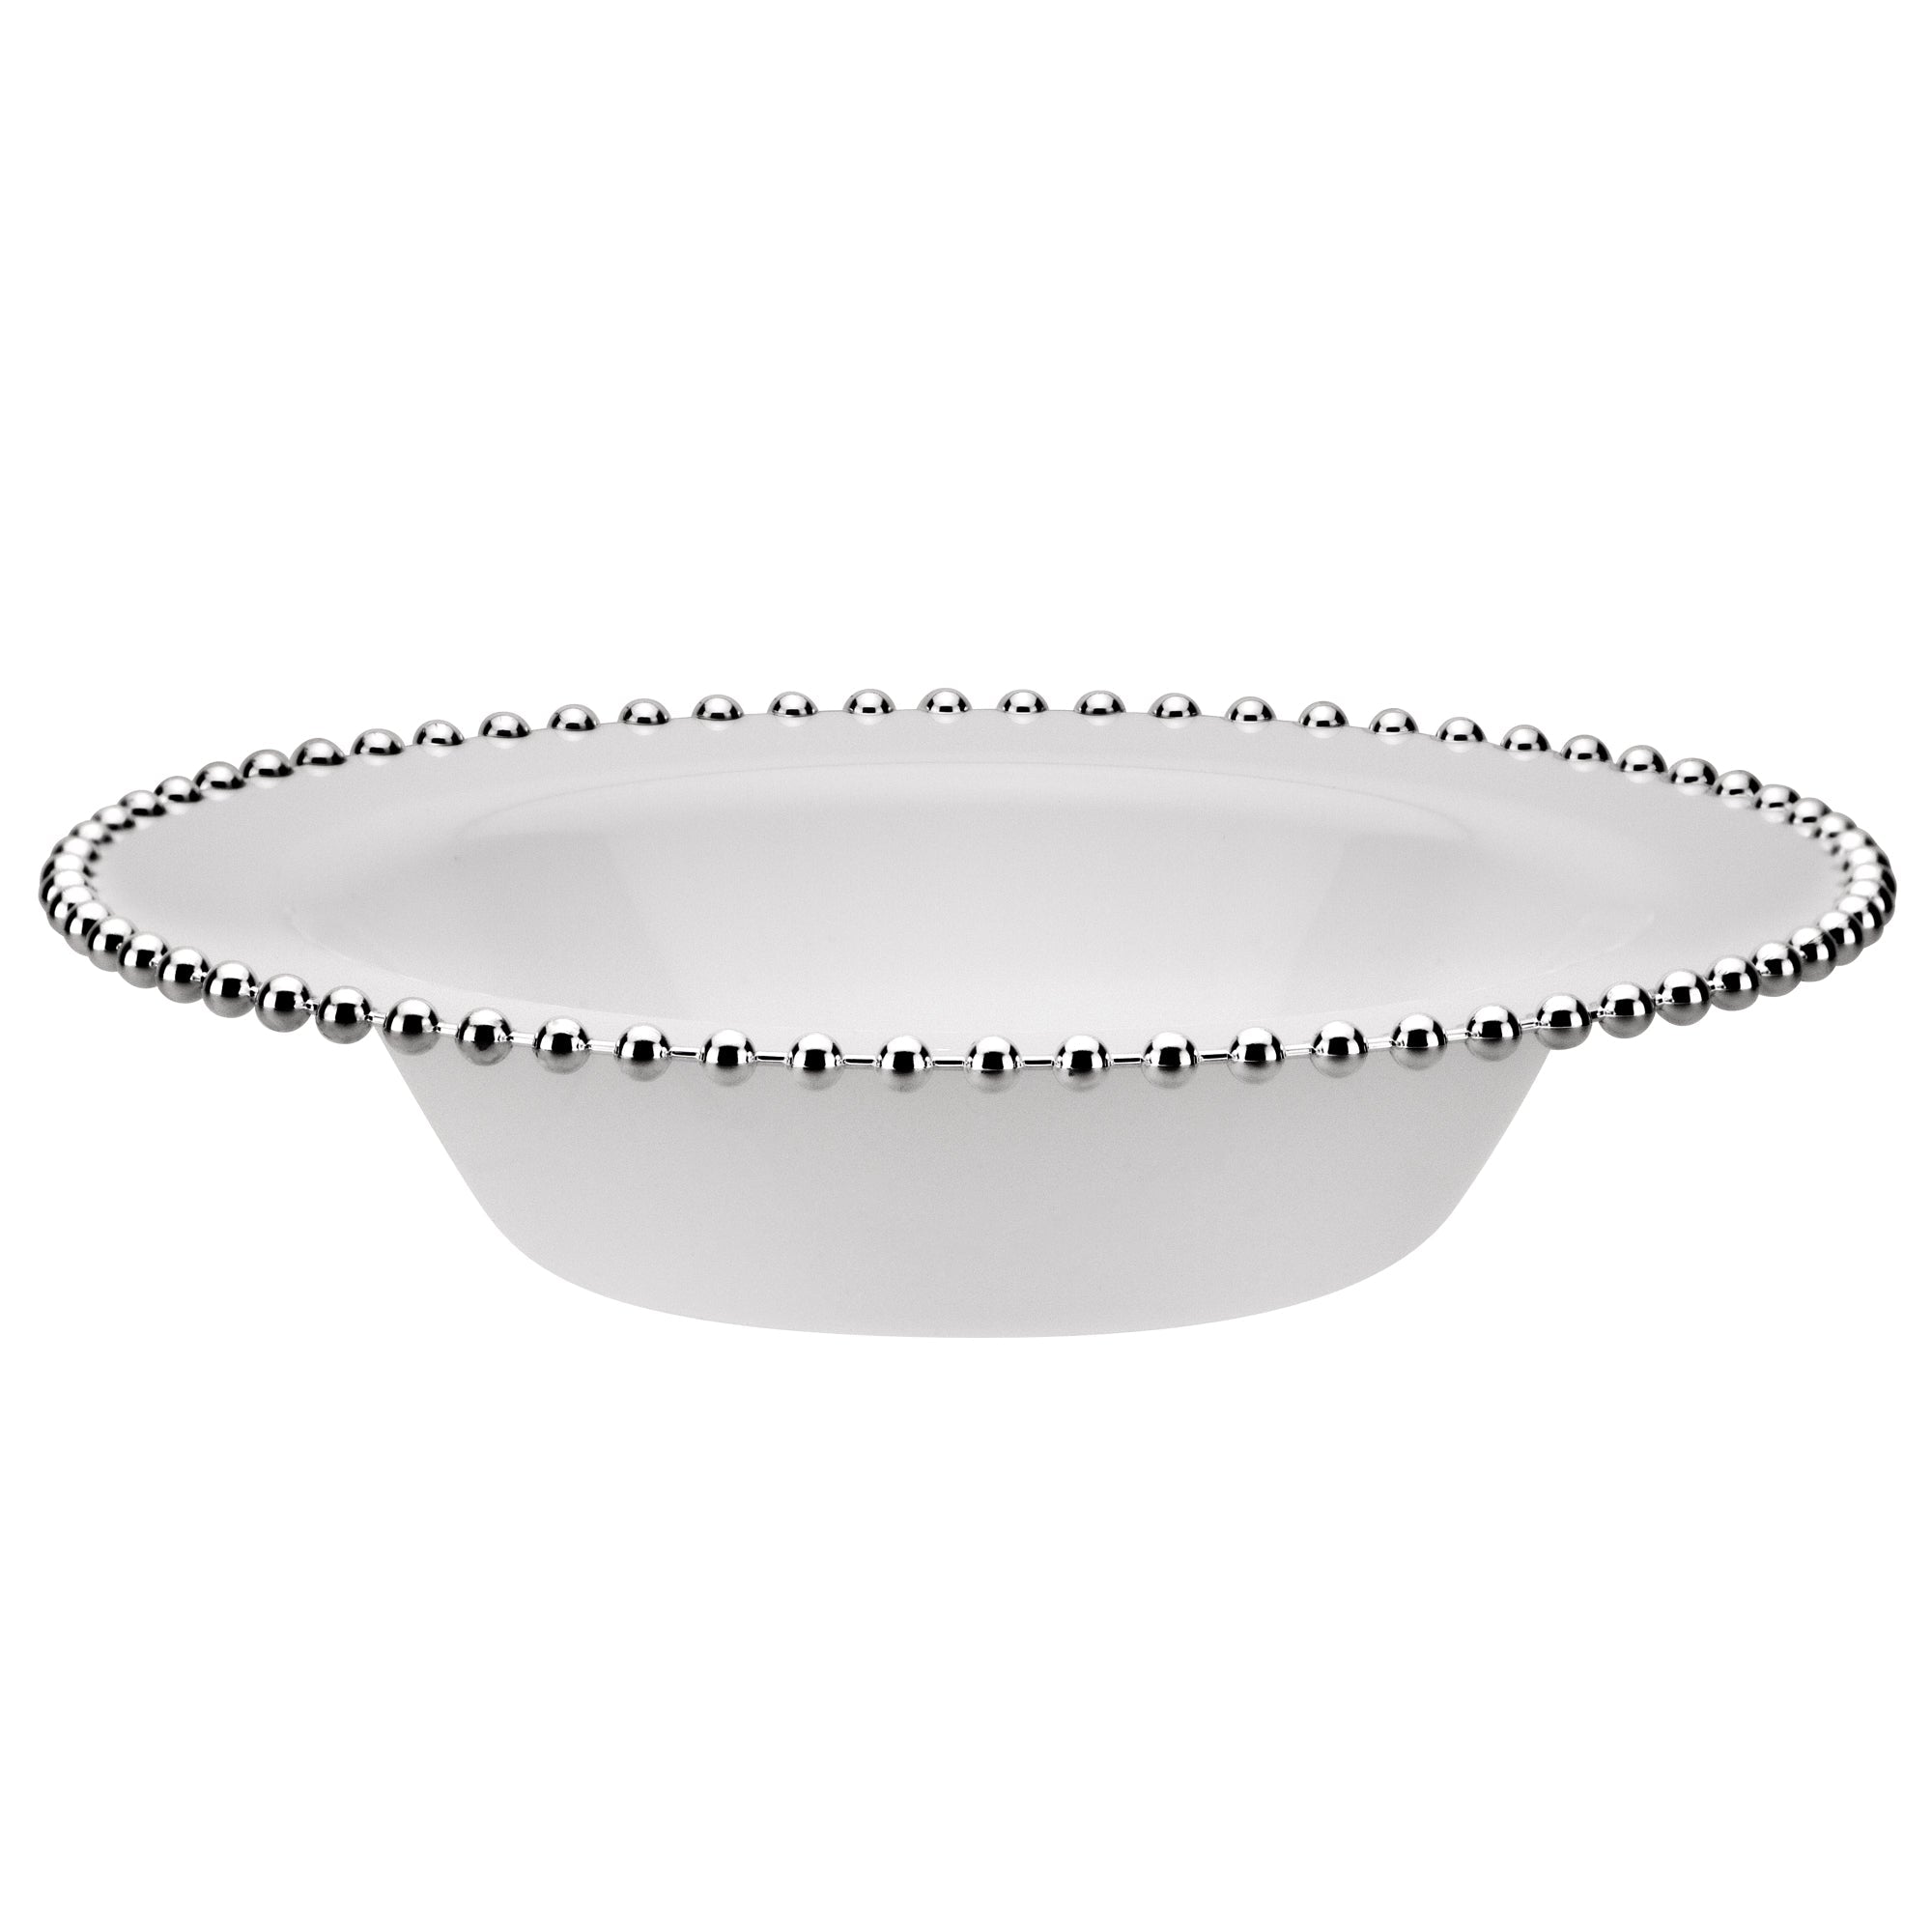 Beaded Premium Plastic Bowl – White With Silver Trim - 14oz – Set of 10